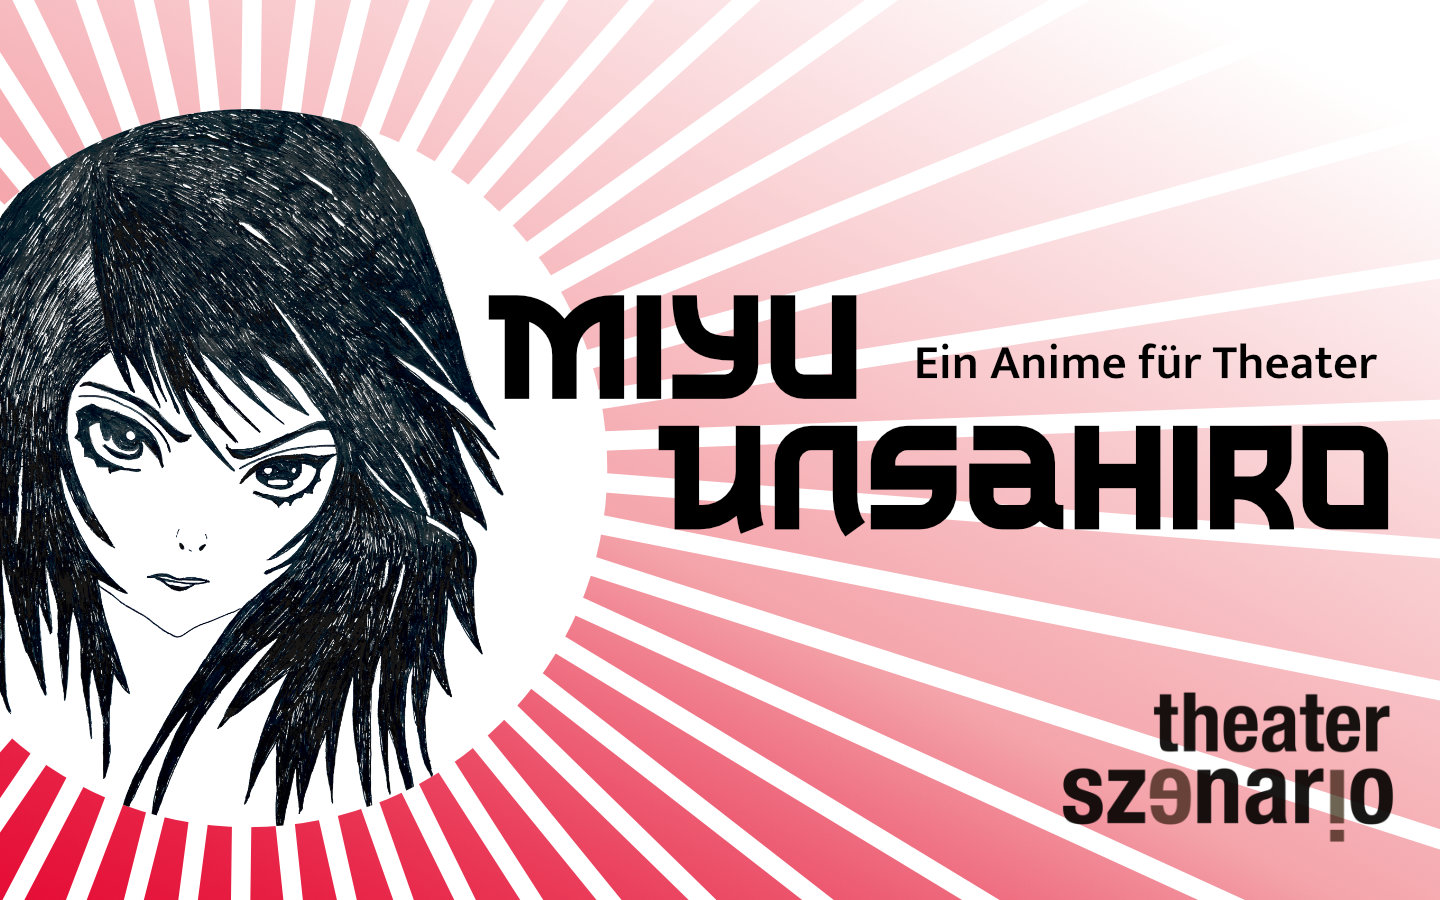 Ab 29. Mai: Miyu Unsahiro. Ein Anime für Theater